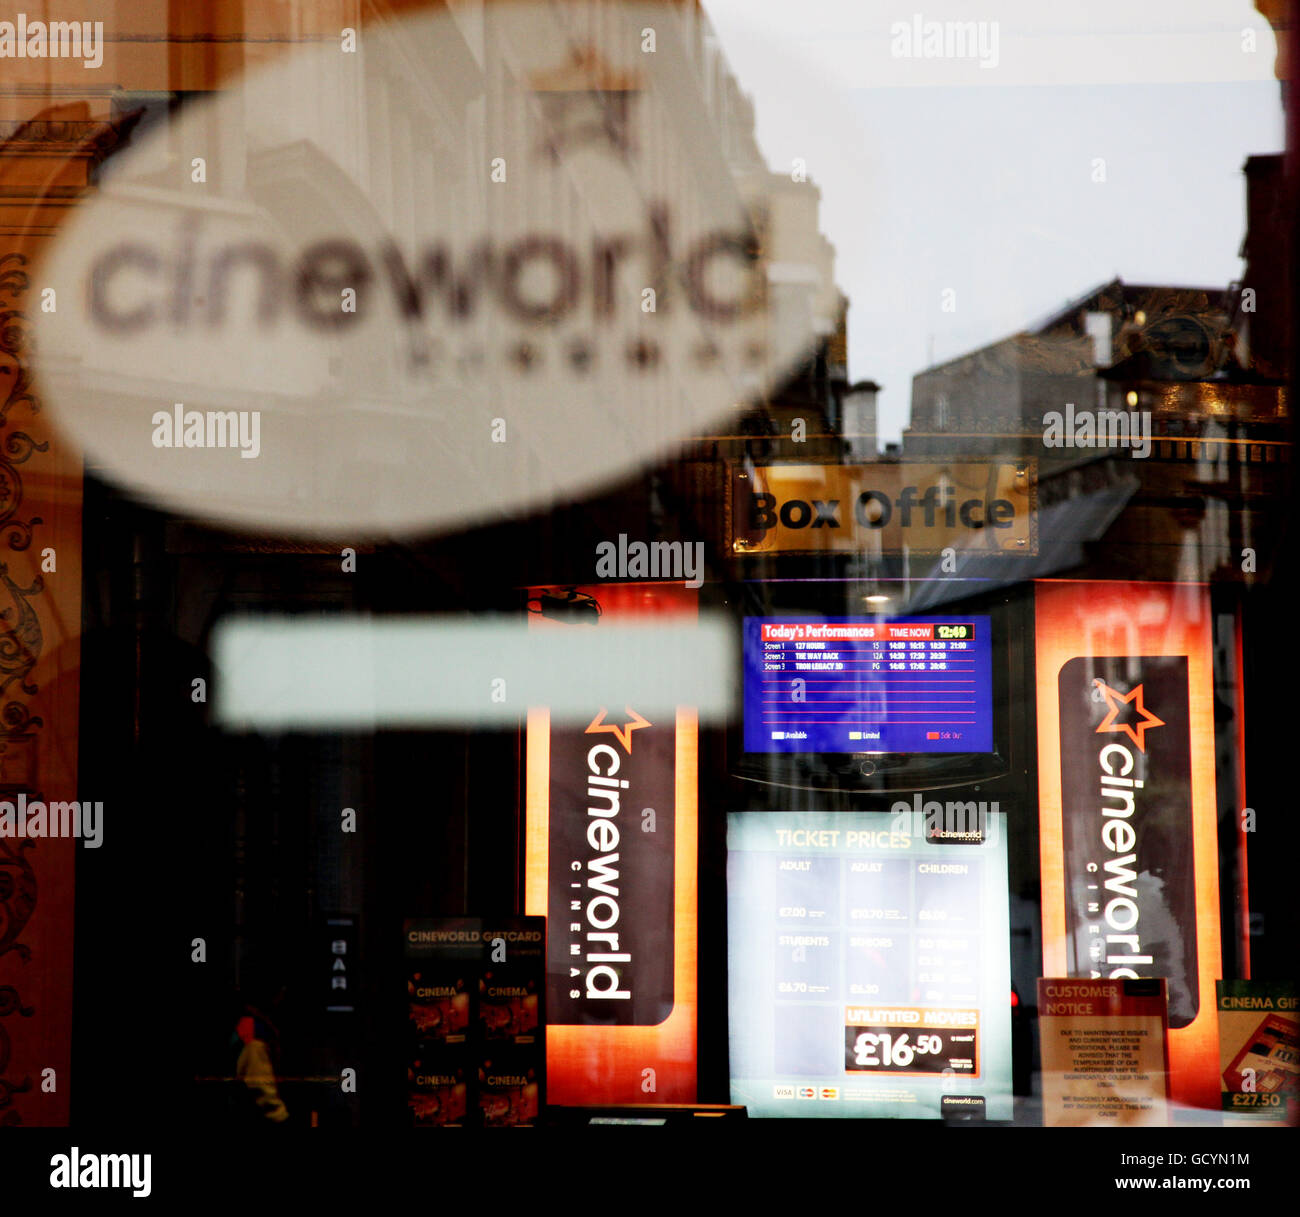 Cineworld back on track after snow disruption Stock Photo